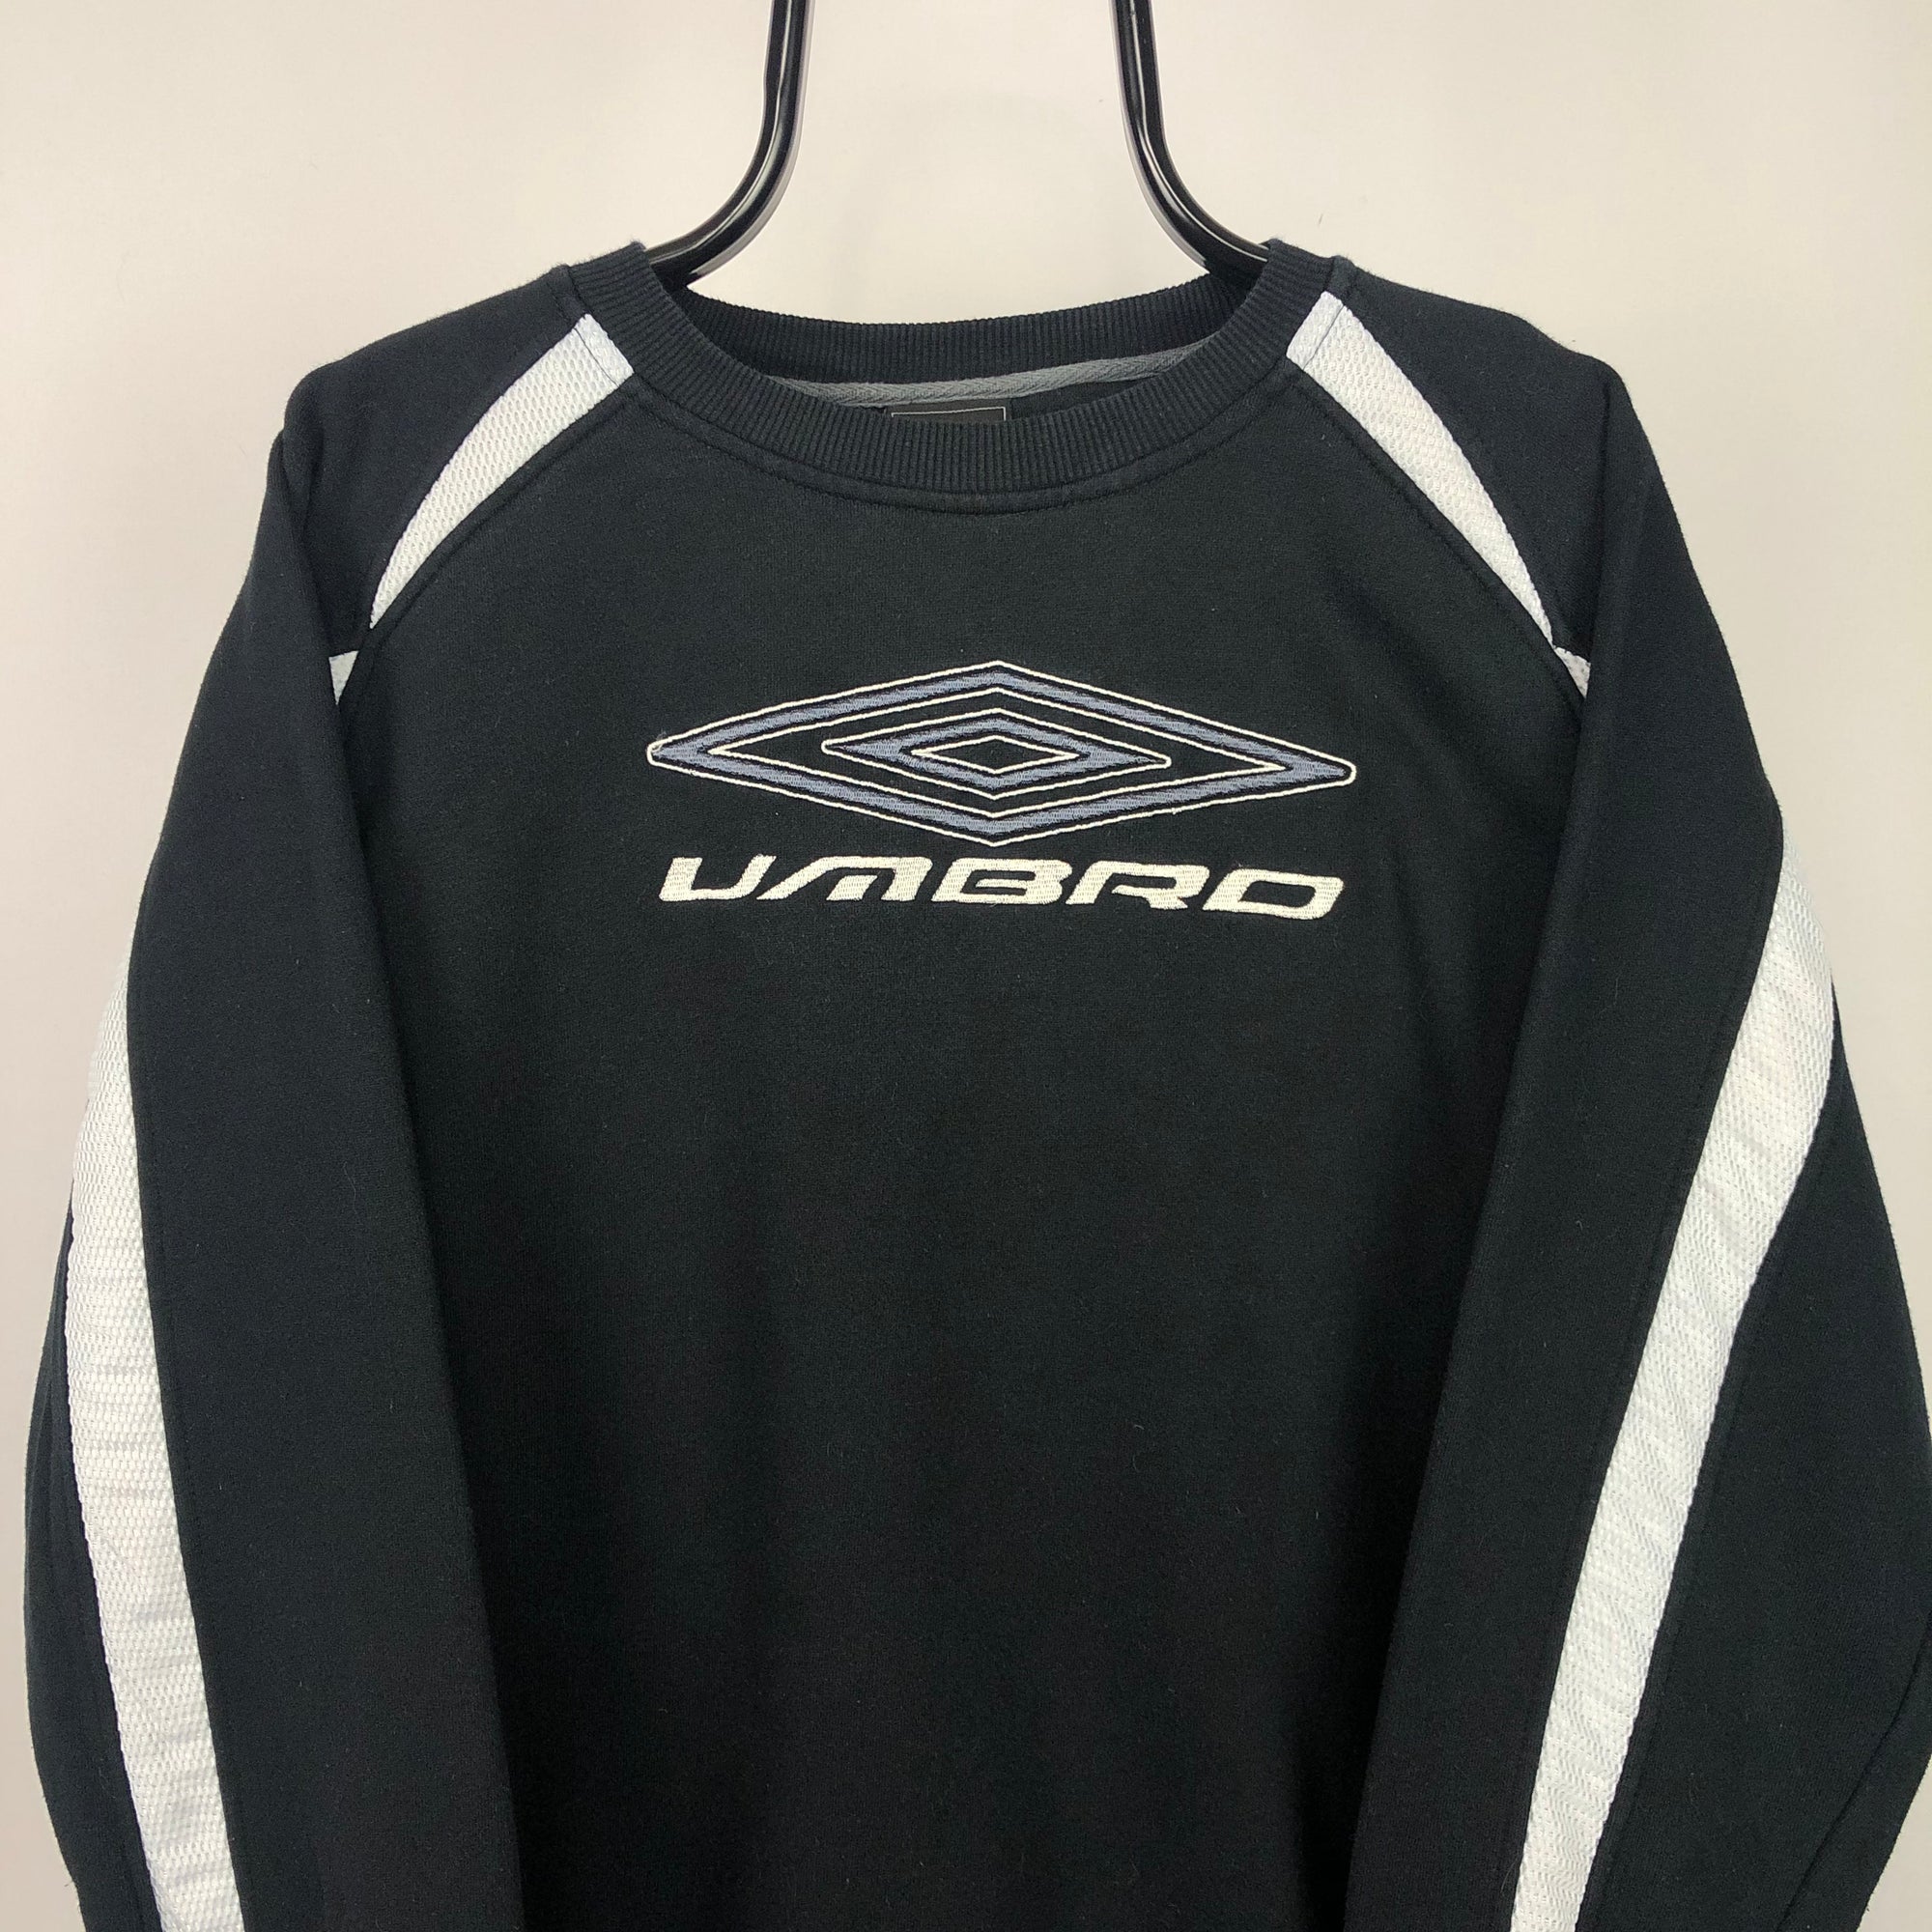 Vintage Umbro Spellout Sweatshirt in Black/White - Men's Medium/Women's Large